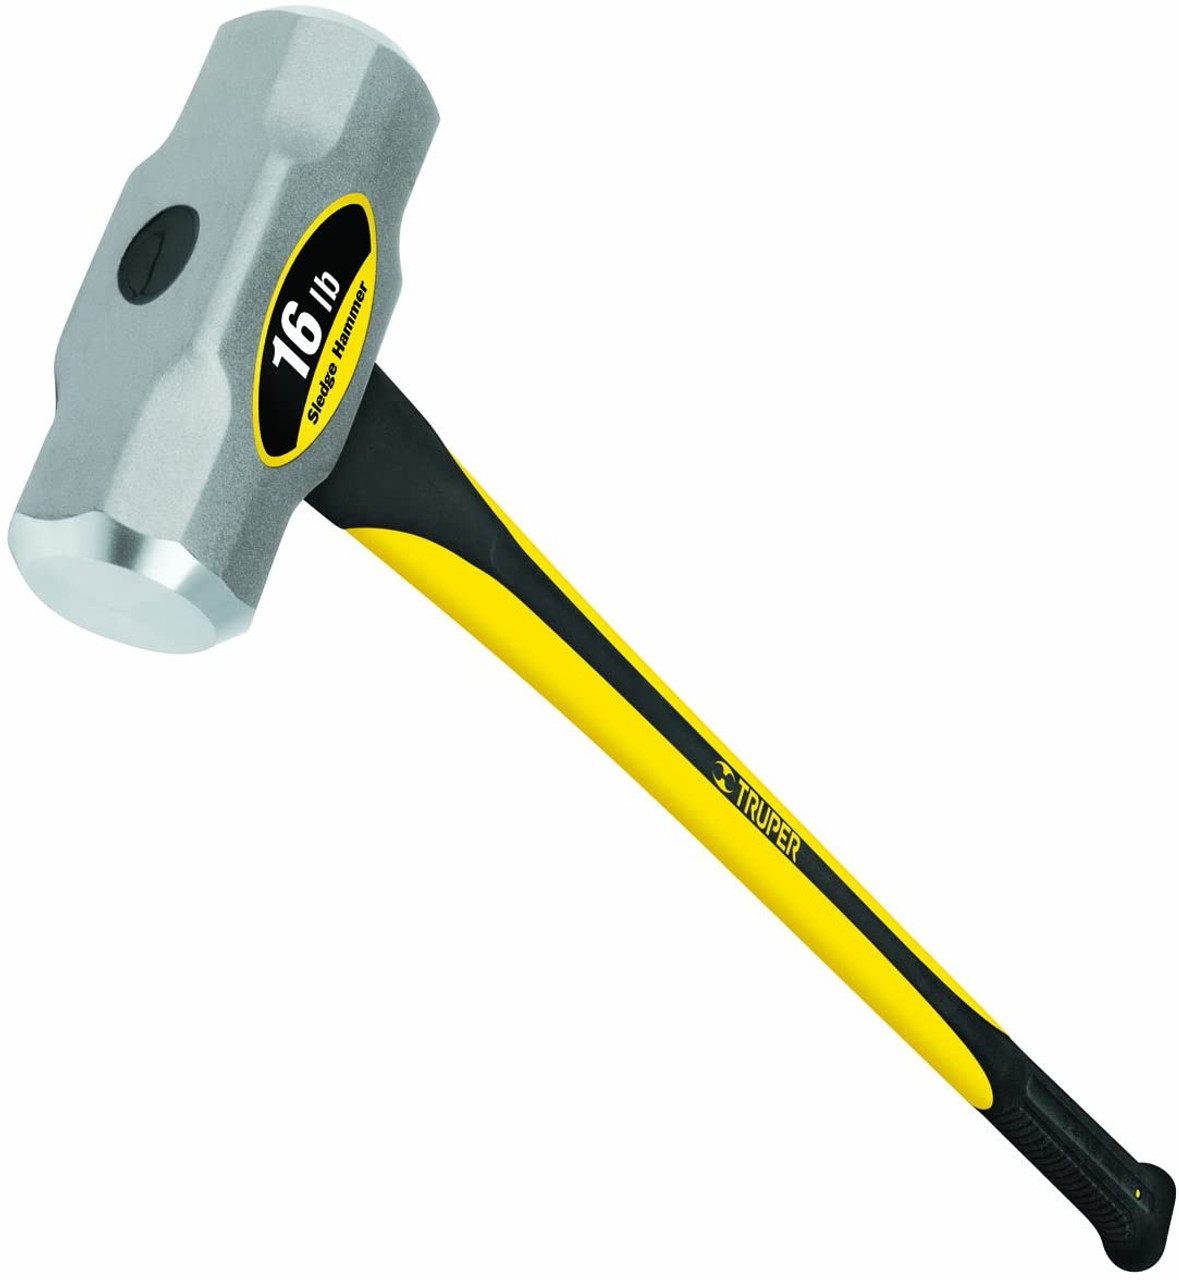 Truper 30933 Sledge Hammer Fiberglass Handle with Rubber Grip 36-Inch, Weight 16 lb